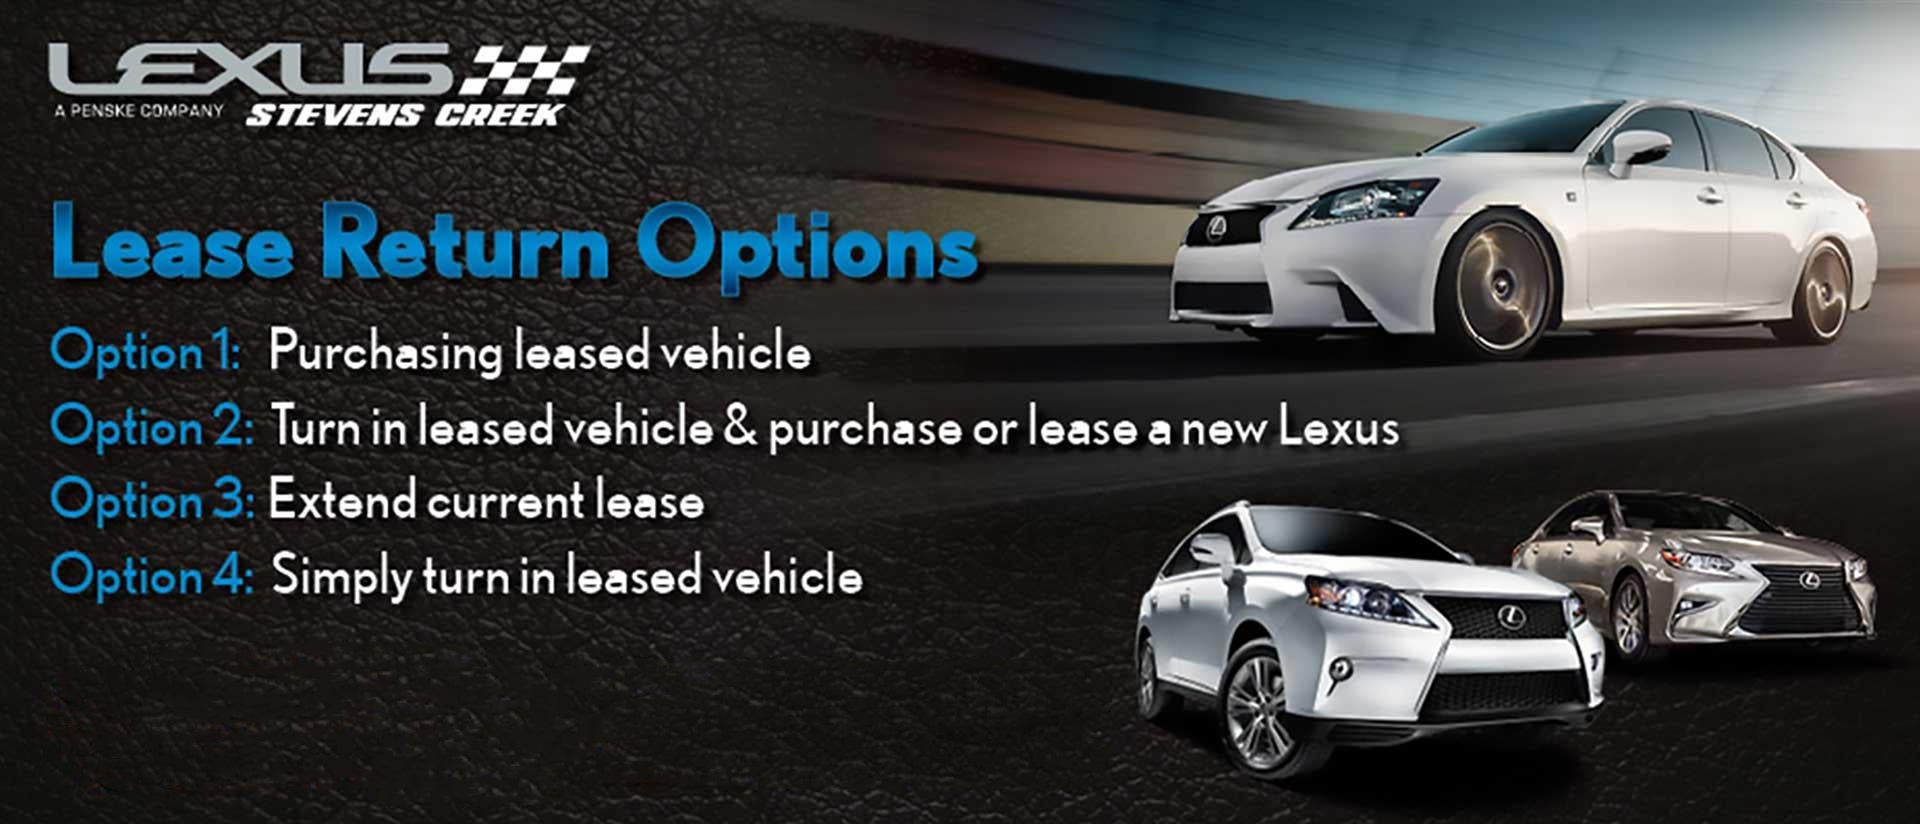 Lease Return Options | Lexus Stevens Creek in San Jose CA